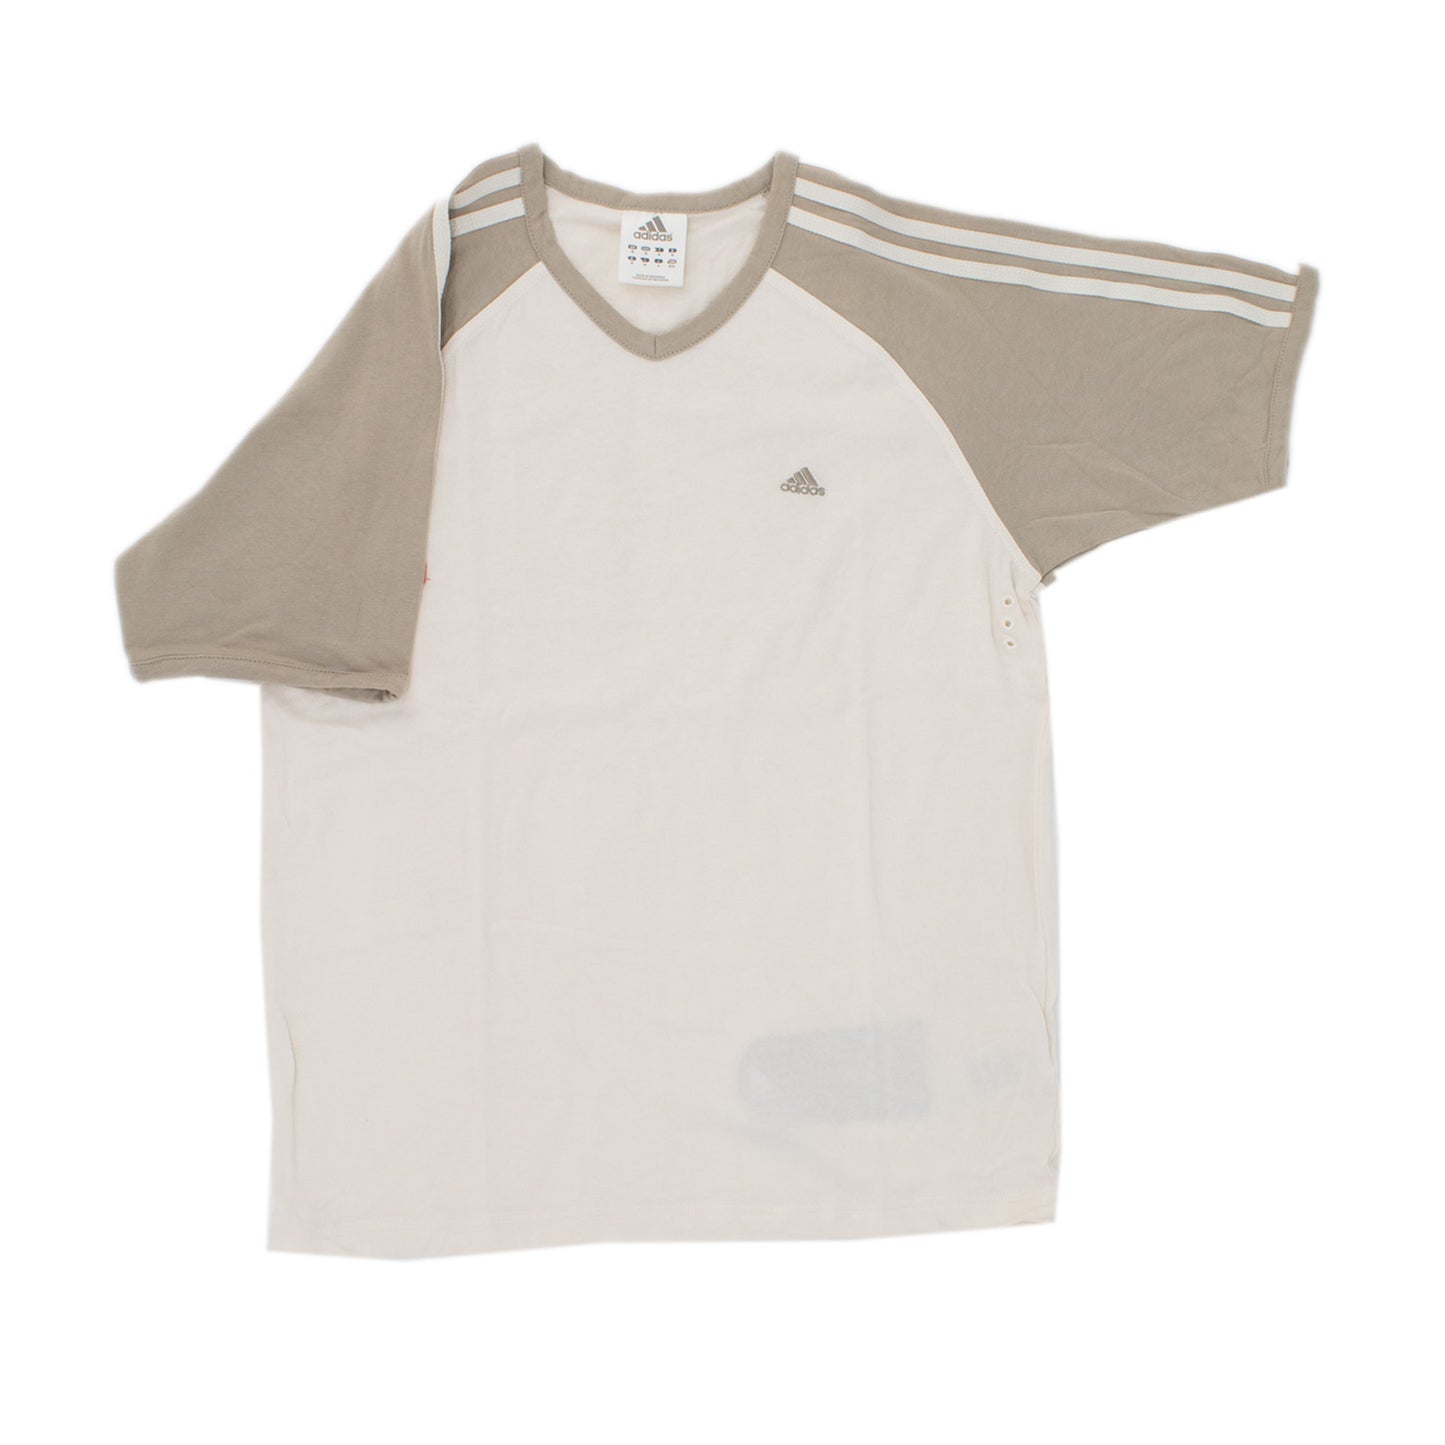 Adidas AD V-TEE Herren T-Shirt Sportshirt Trainingsshirt 697282 Weiß Gr. M